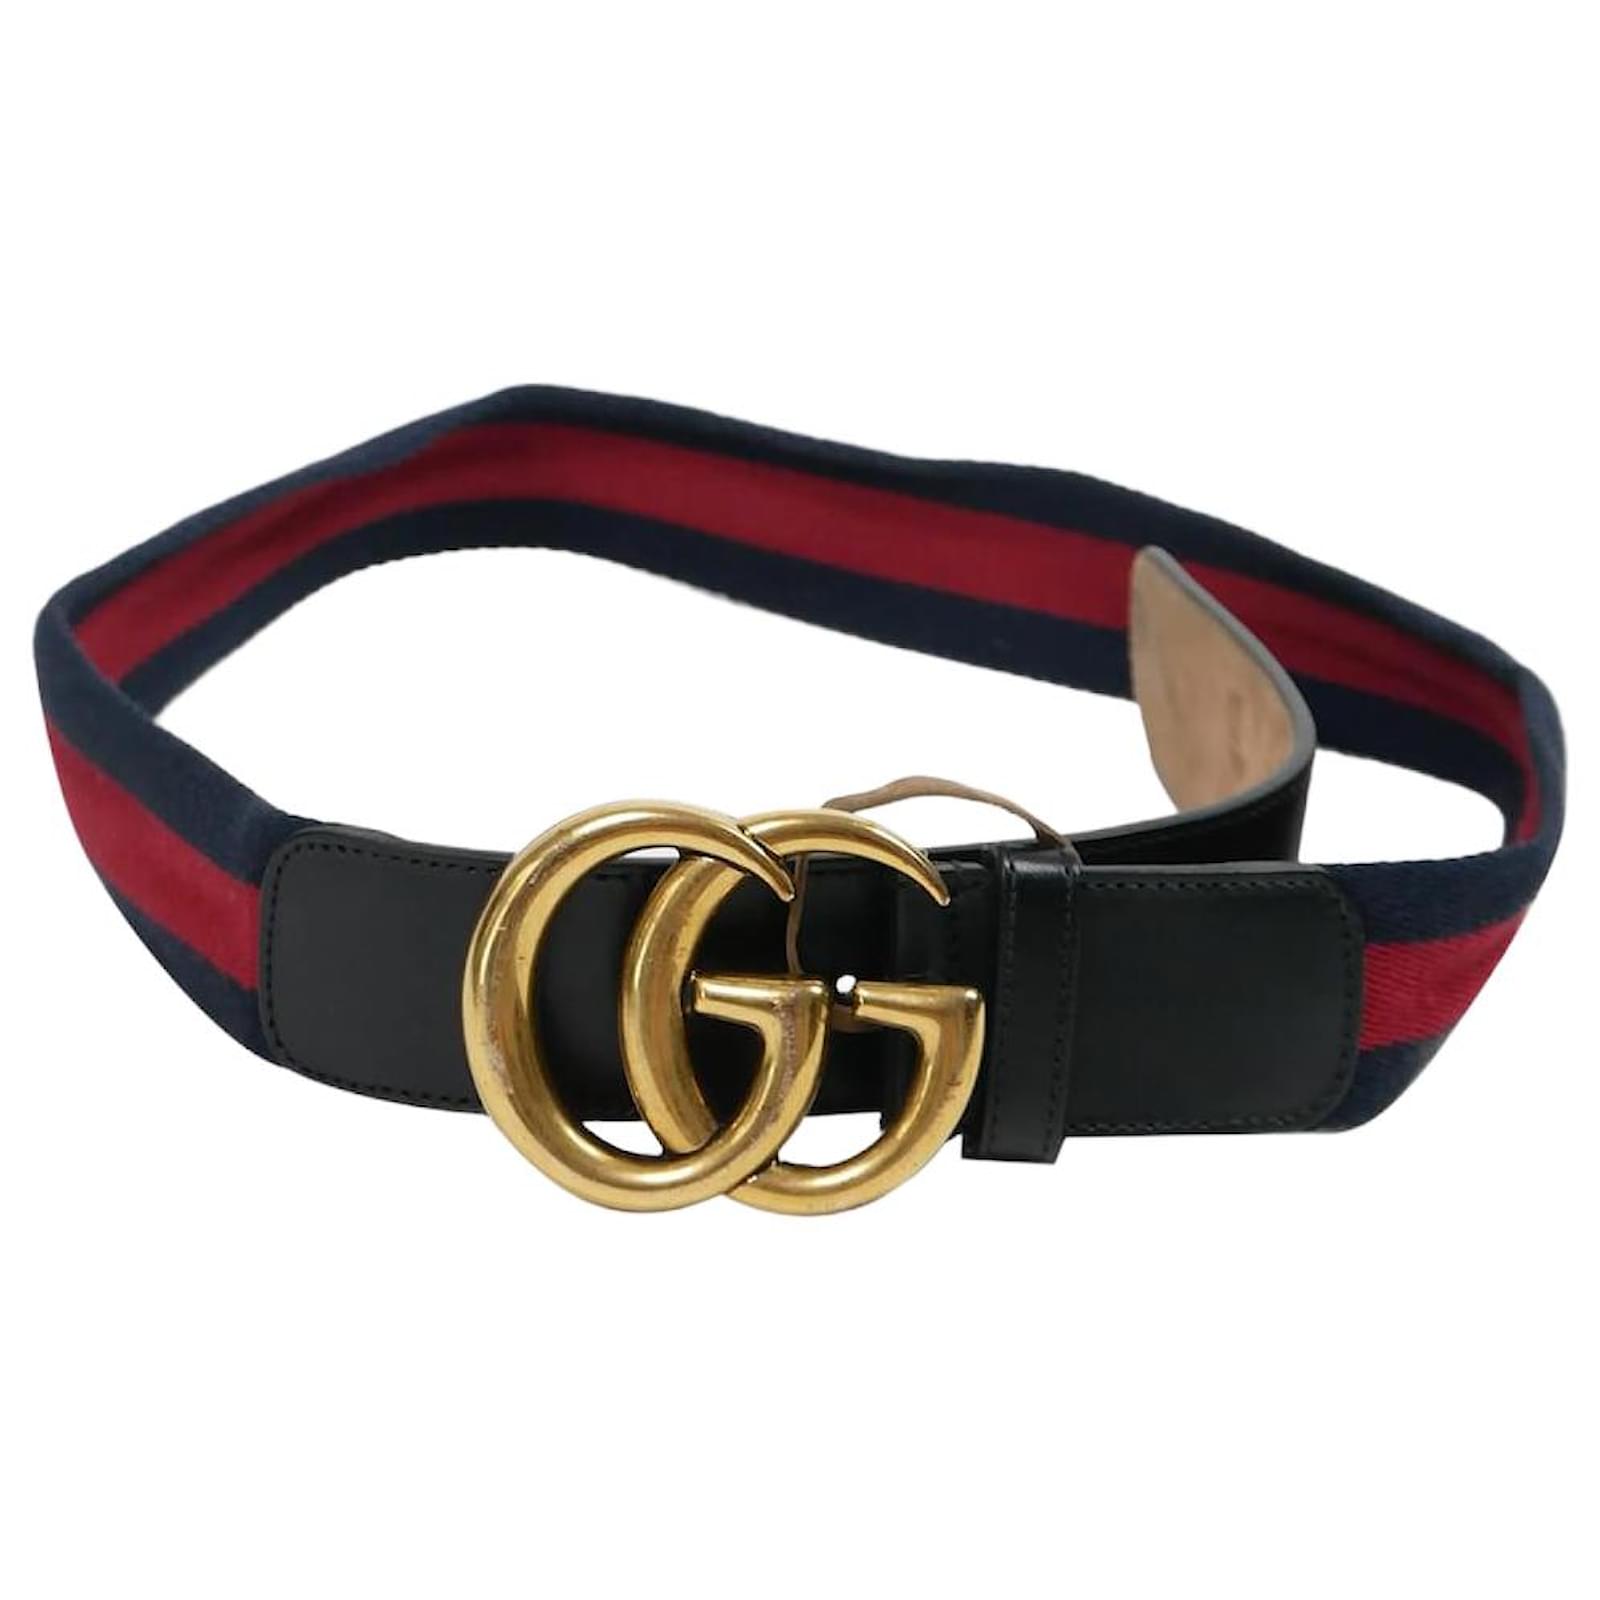 Double G Buckle GG Belt - Gucci - Woman